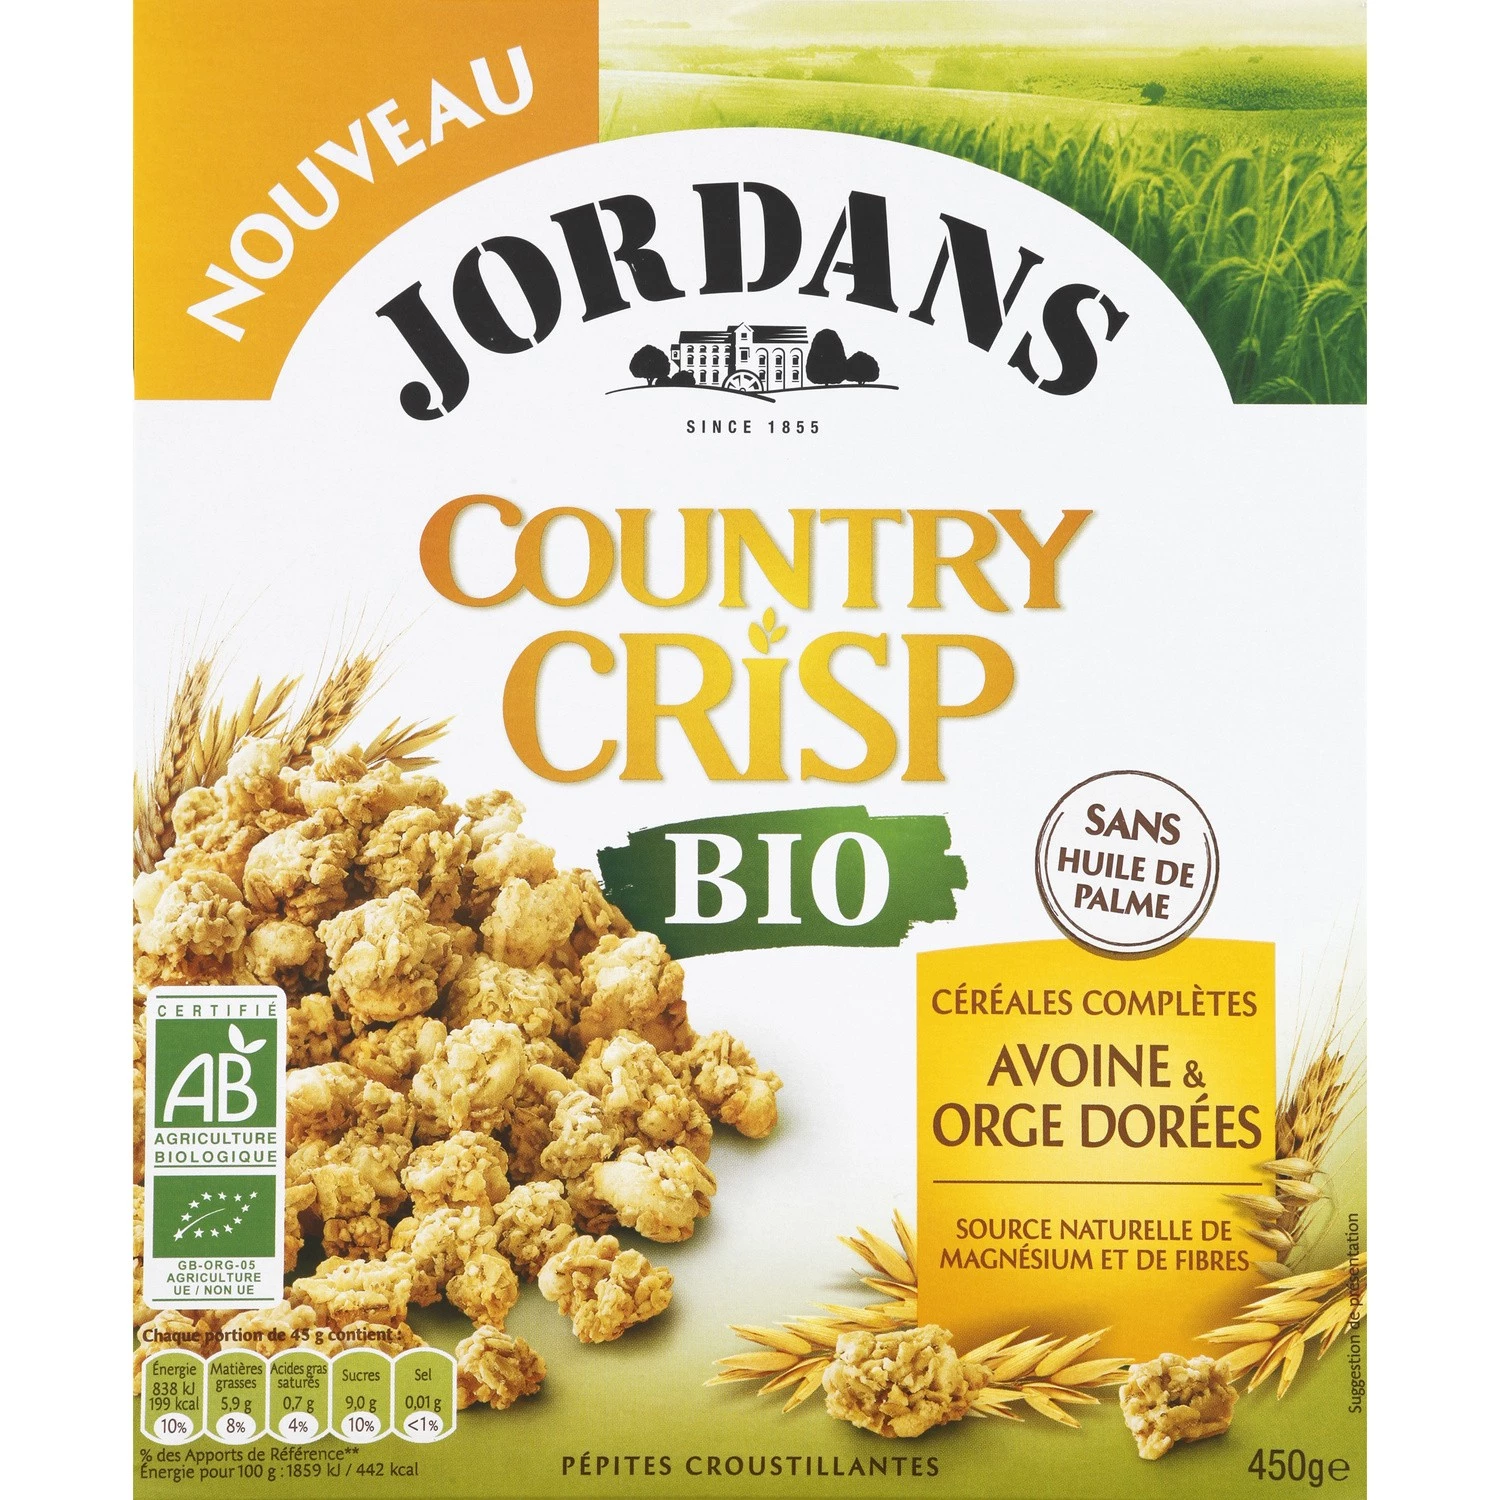 Country Crisp Bio Avoine & orge dorée 450 g - JORDANS